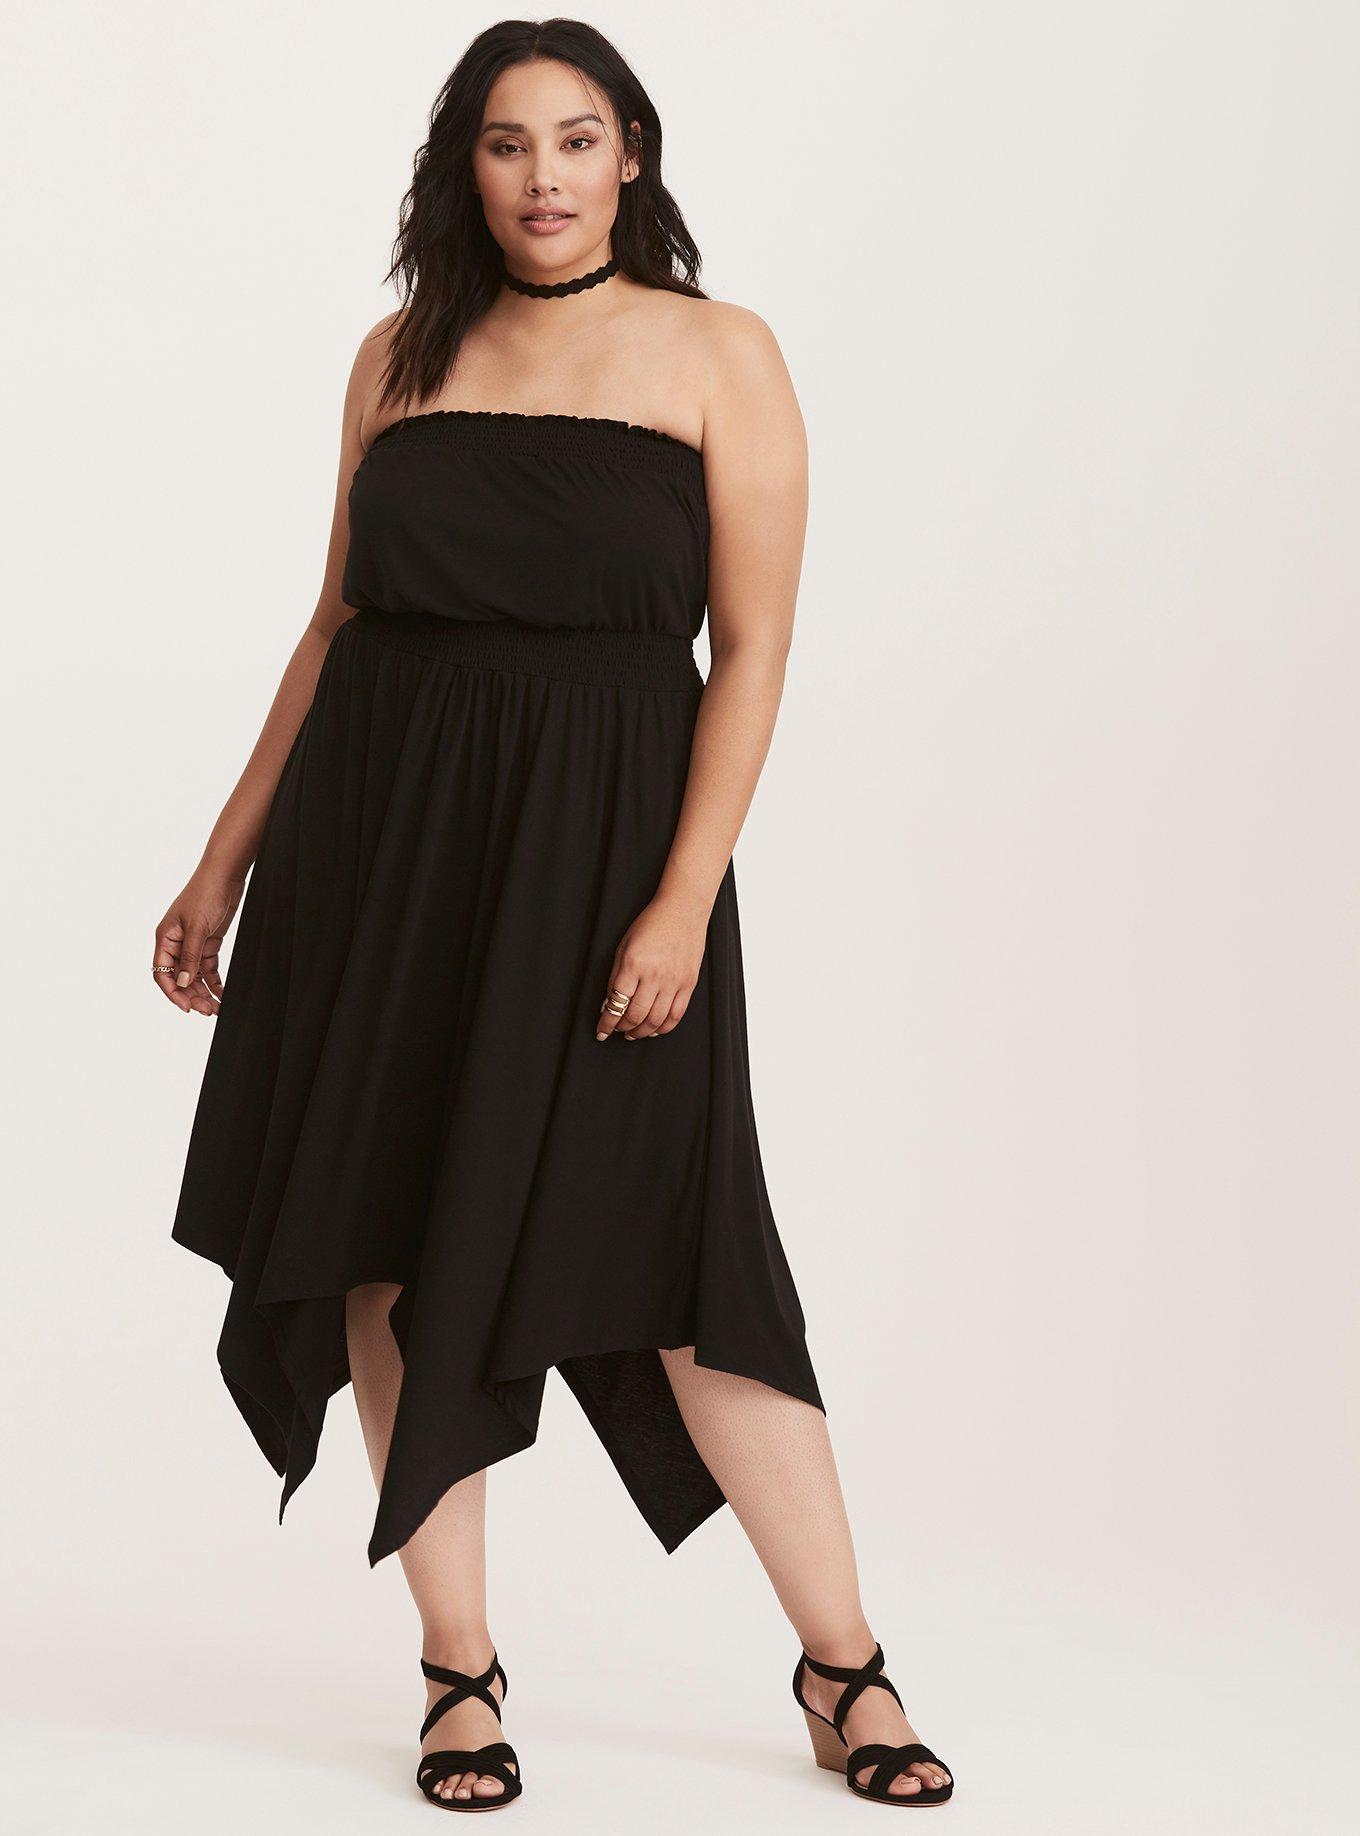 Plus Size - Black Smocked Jersey Tube Dress - Torrid